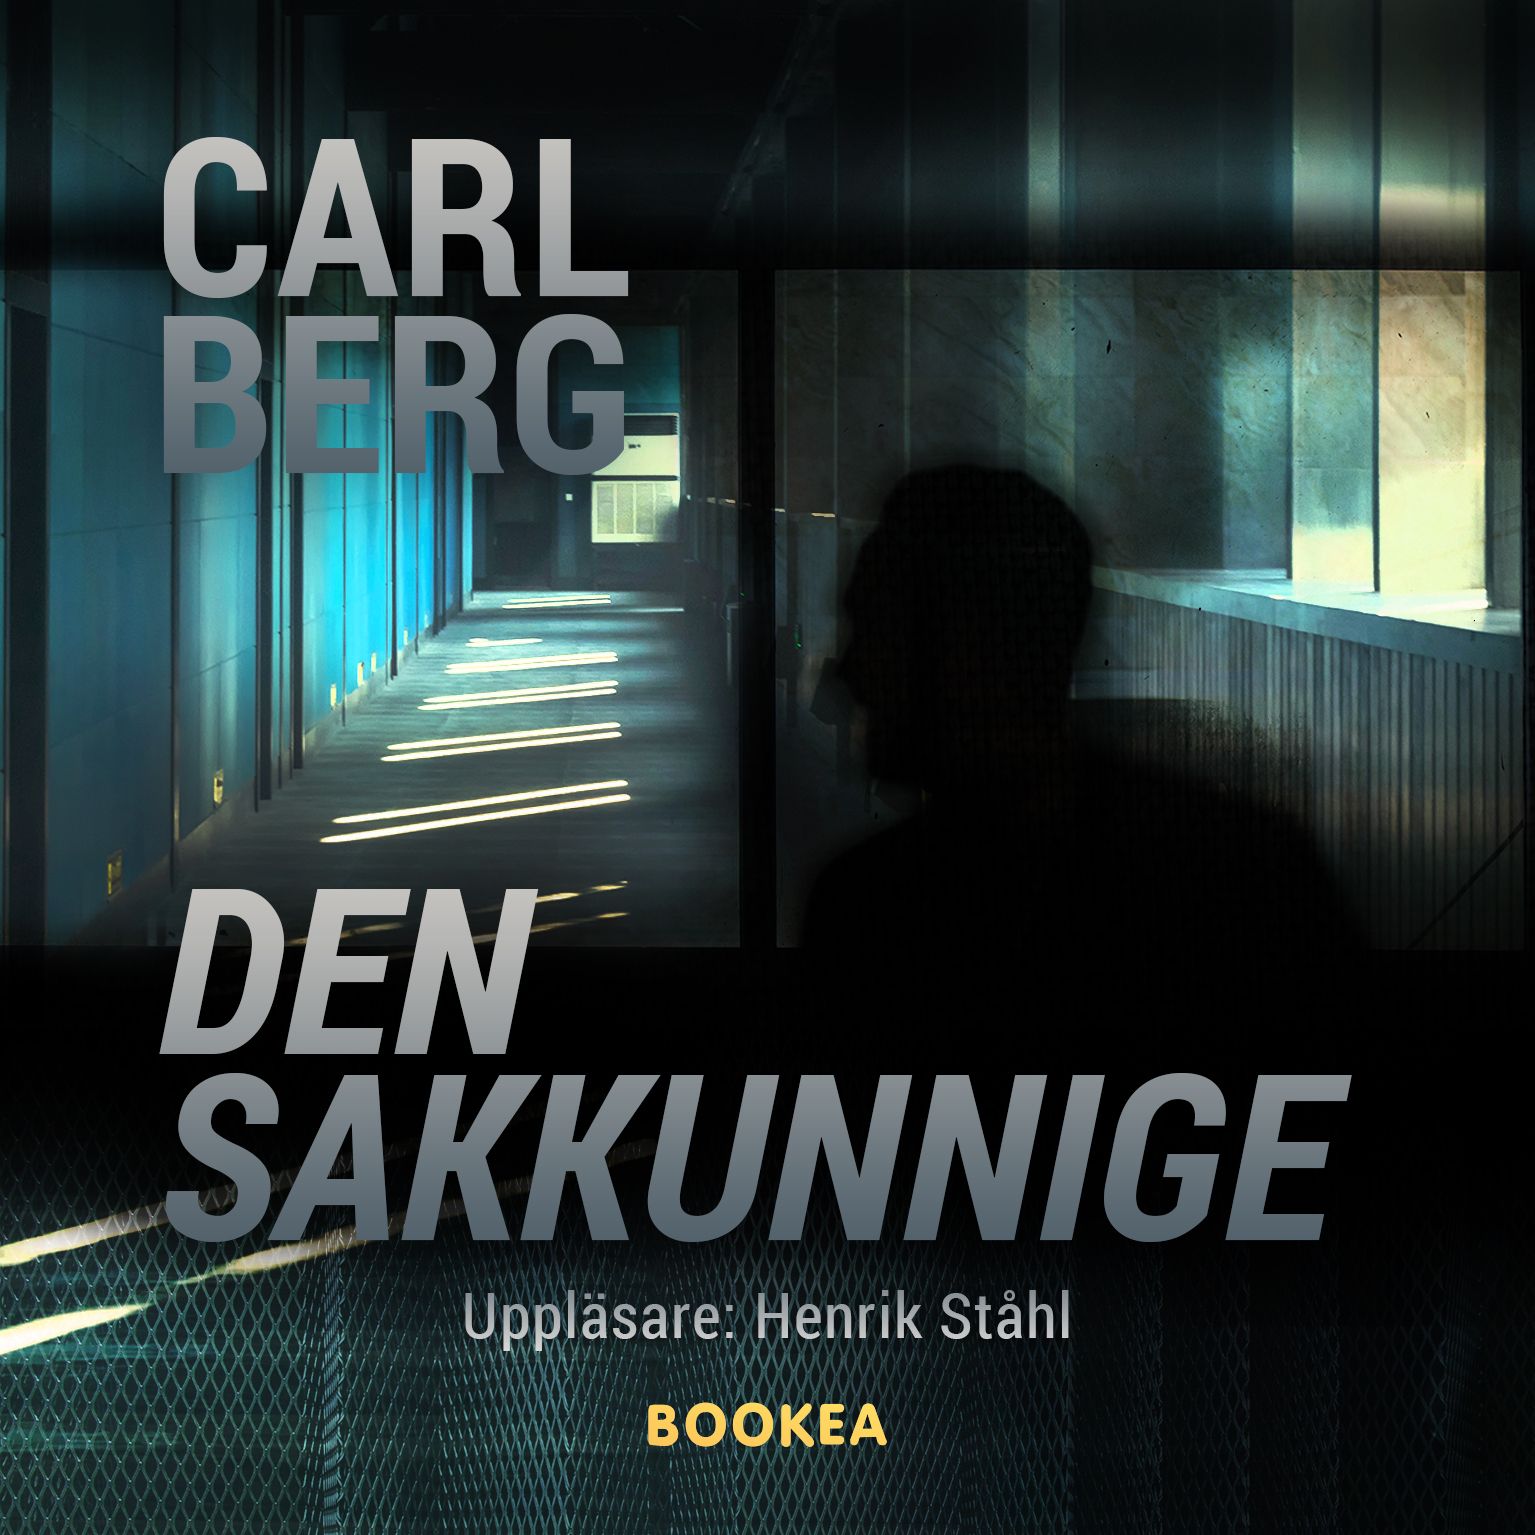 Den sakkunnige, audiobook by Carl Berg